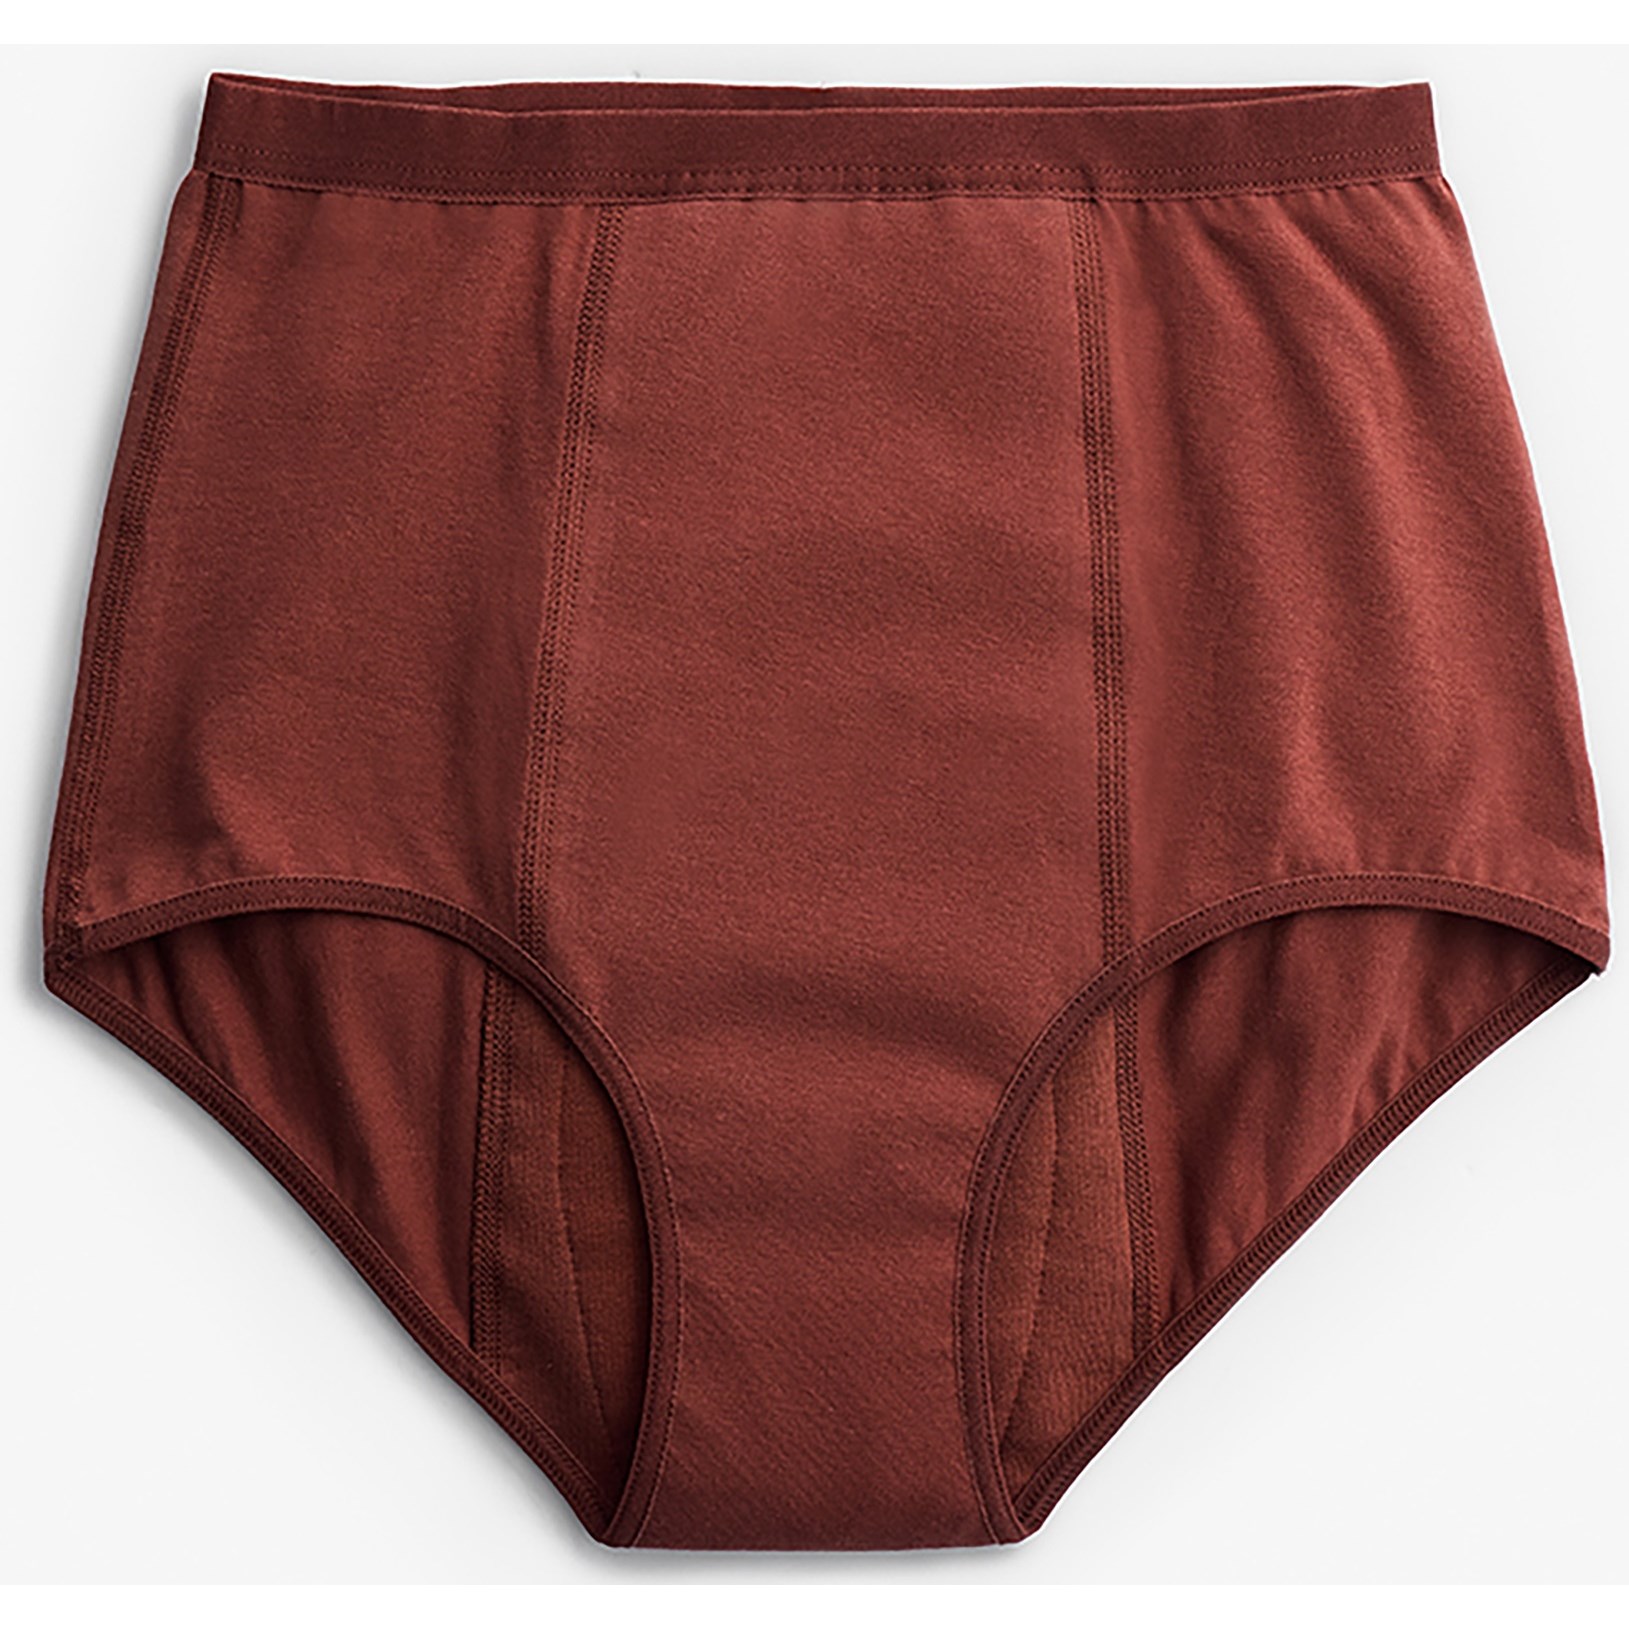 Imse Period Underwear High Waist Heavy Flow Rusty Bordeaux XL